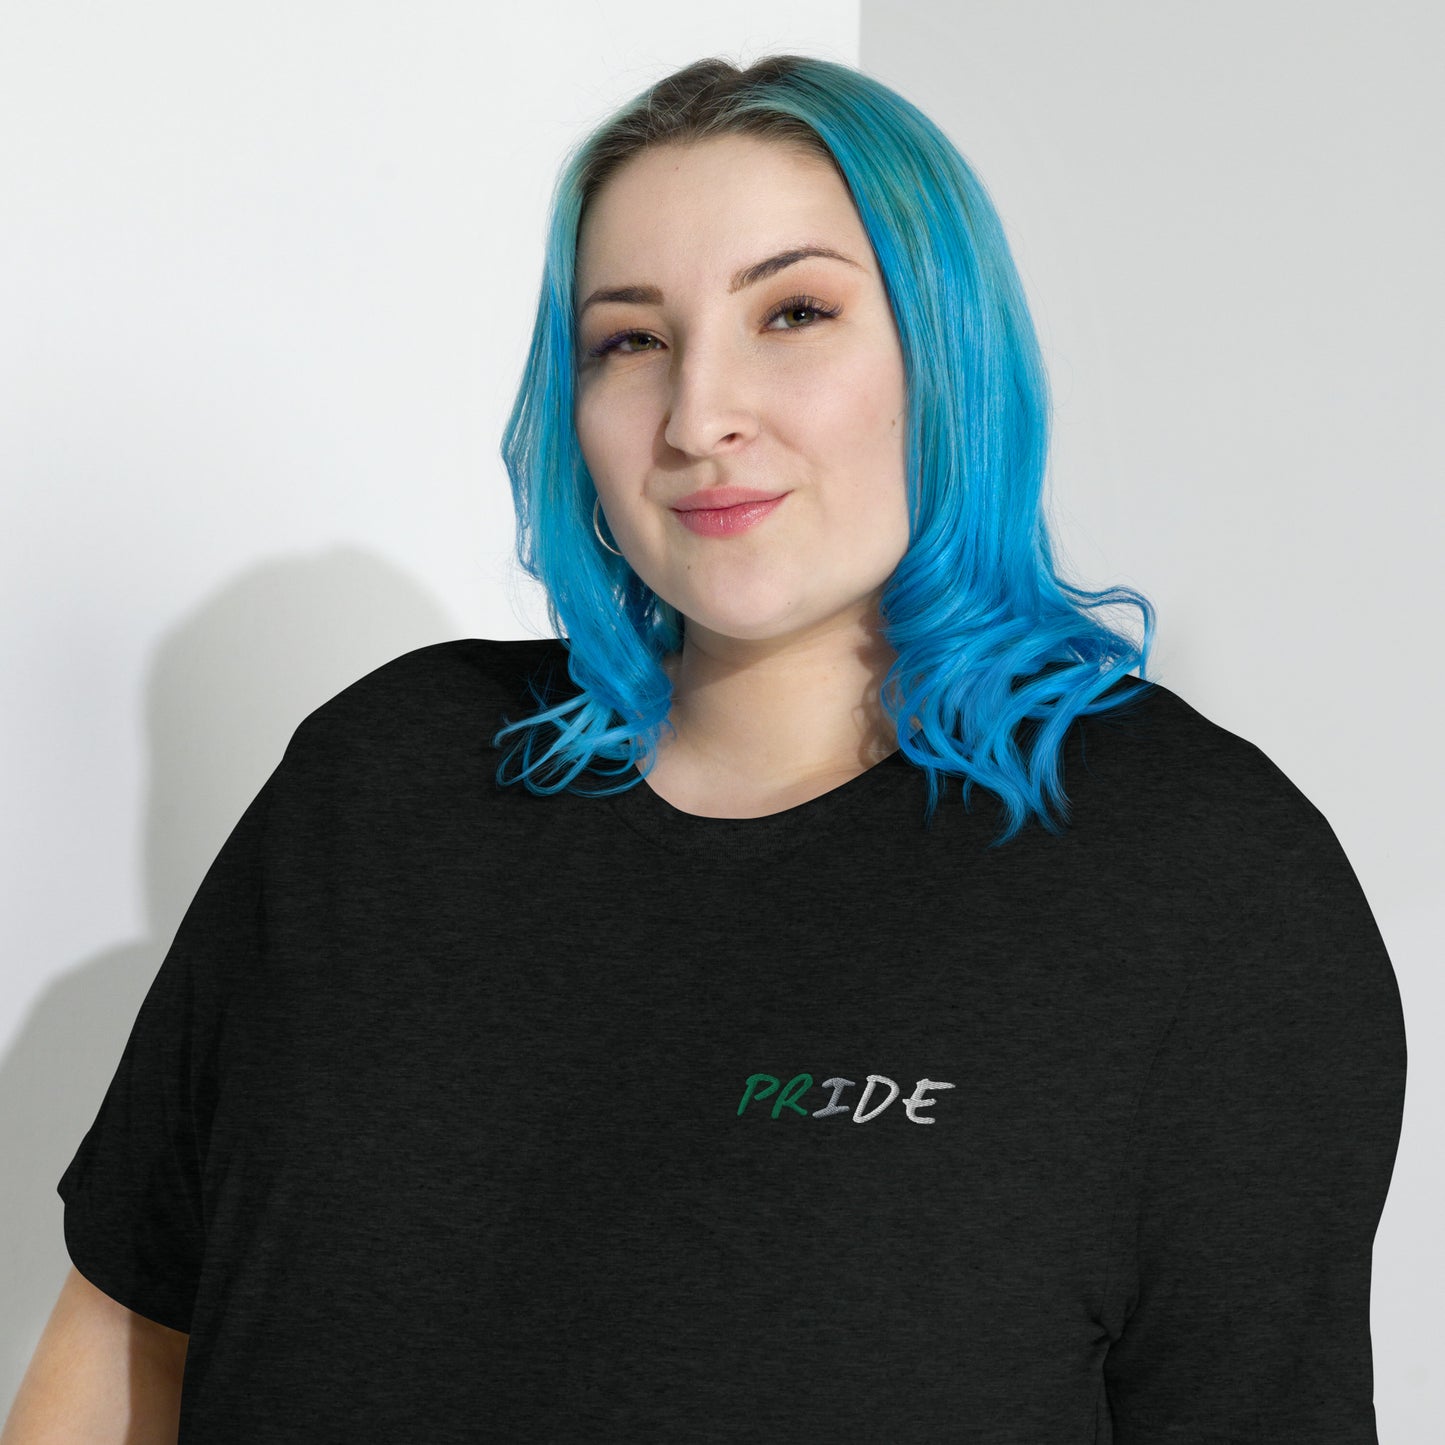 Pride unisex short sleeve t-shirt